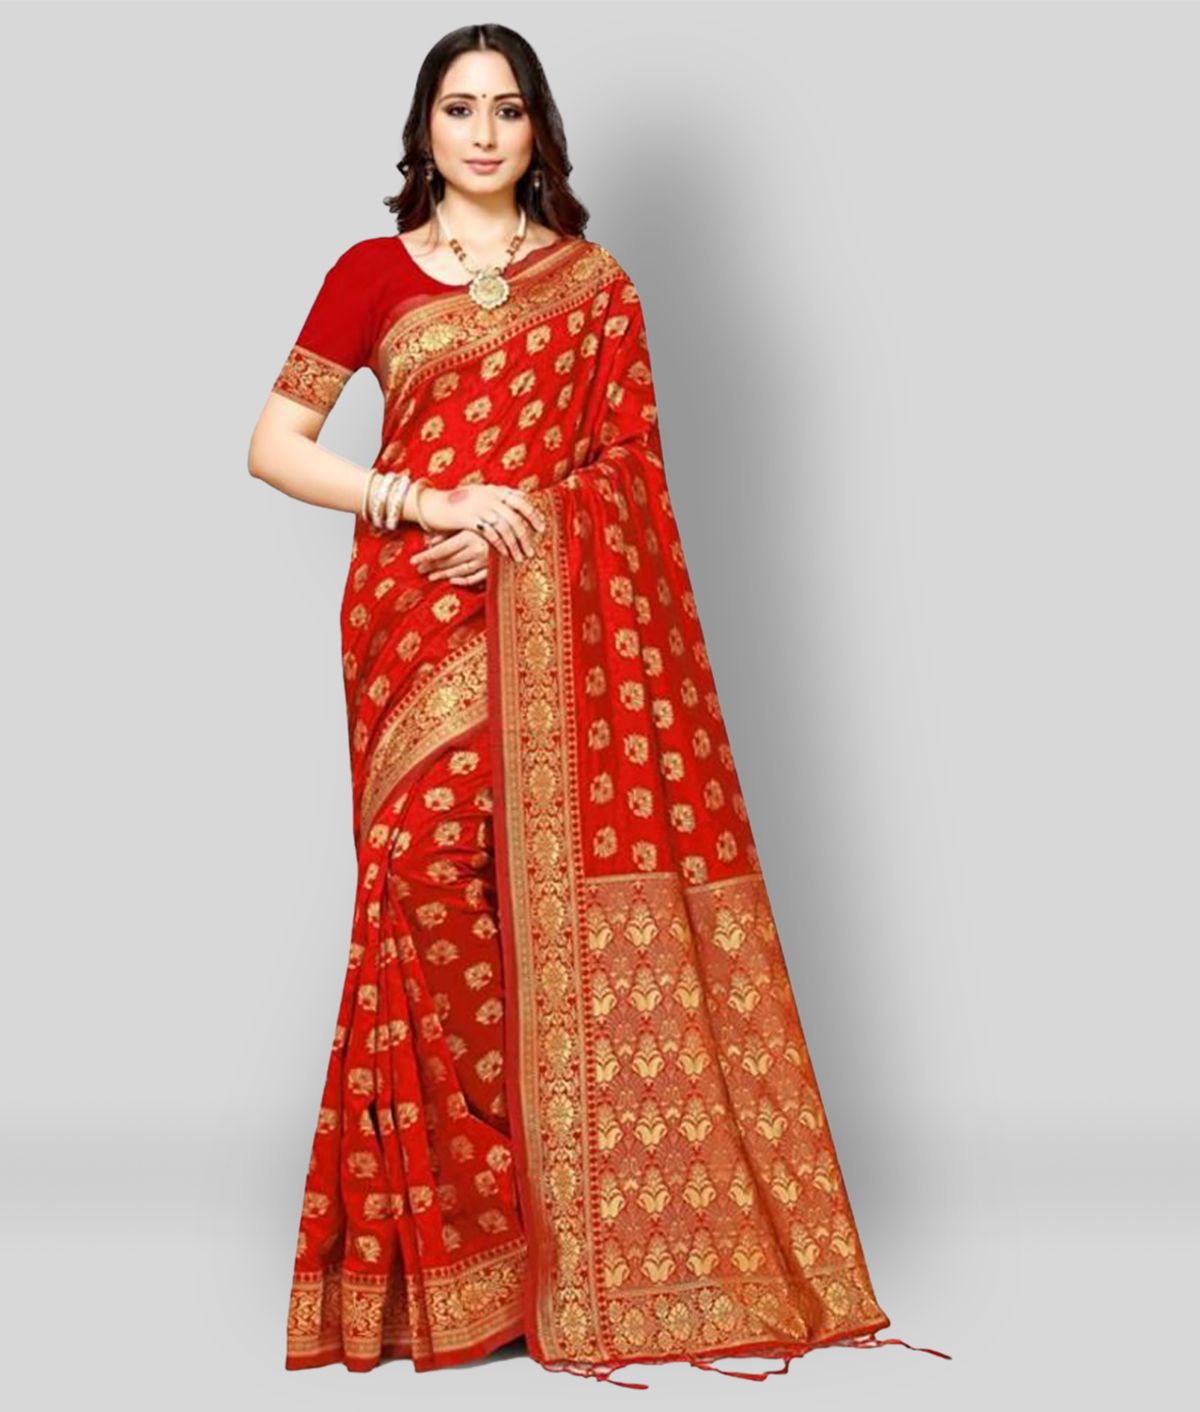     			NENCY FASHION - Red Banarasi Silk Saree With Blouse Piece (Pack of 1)